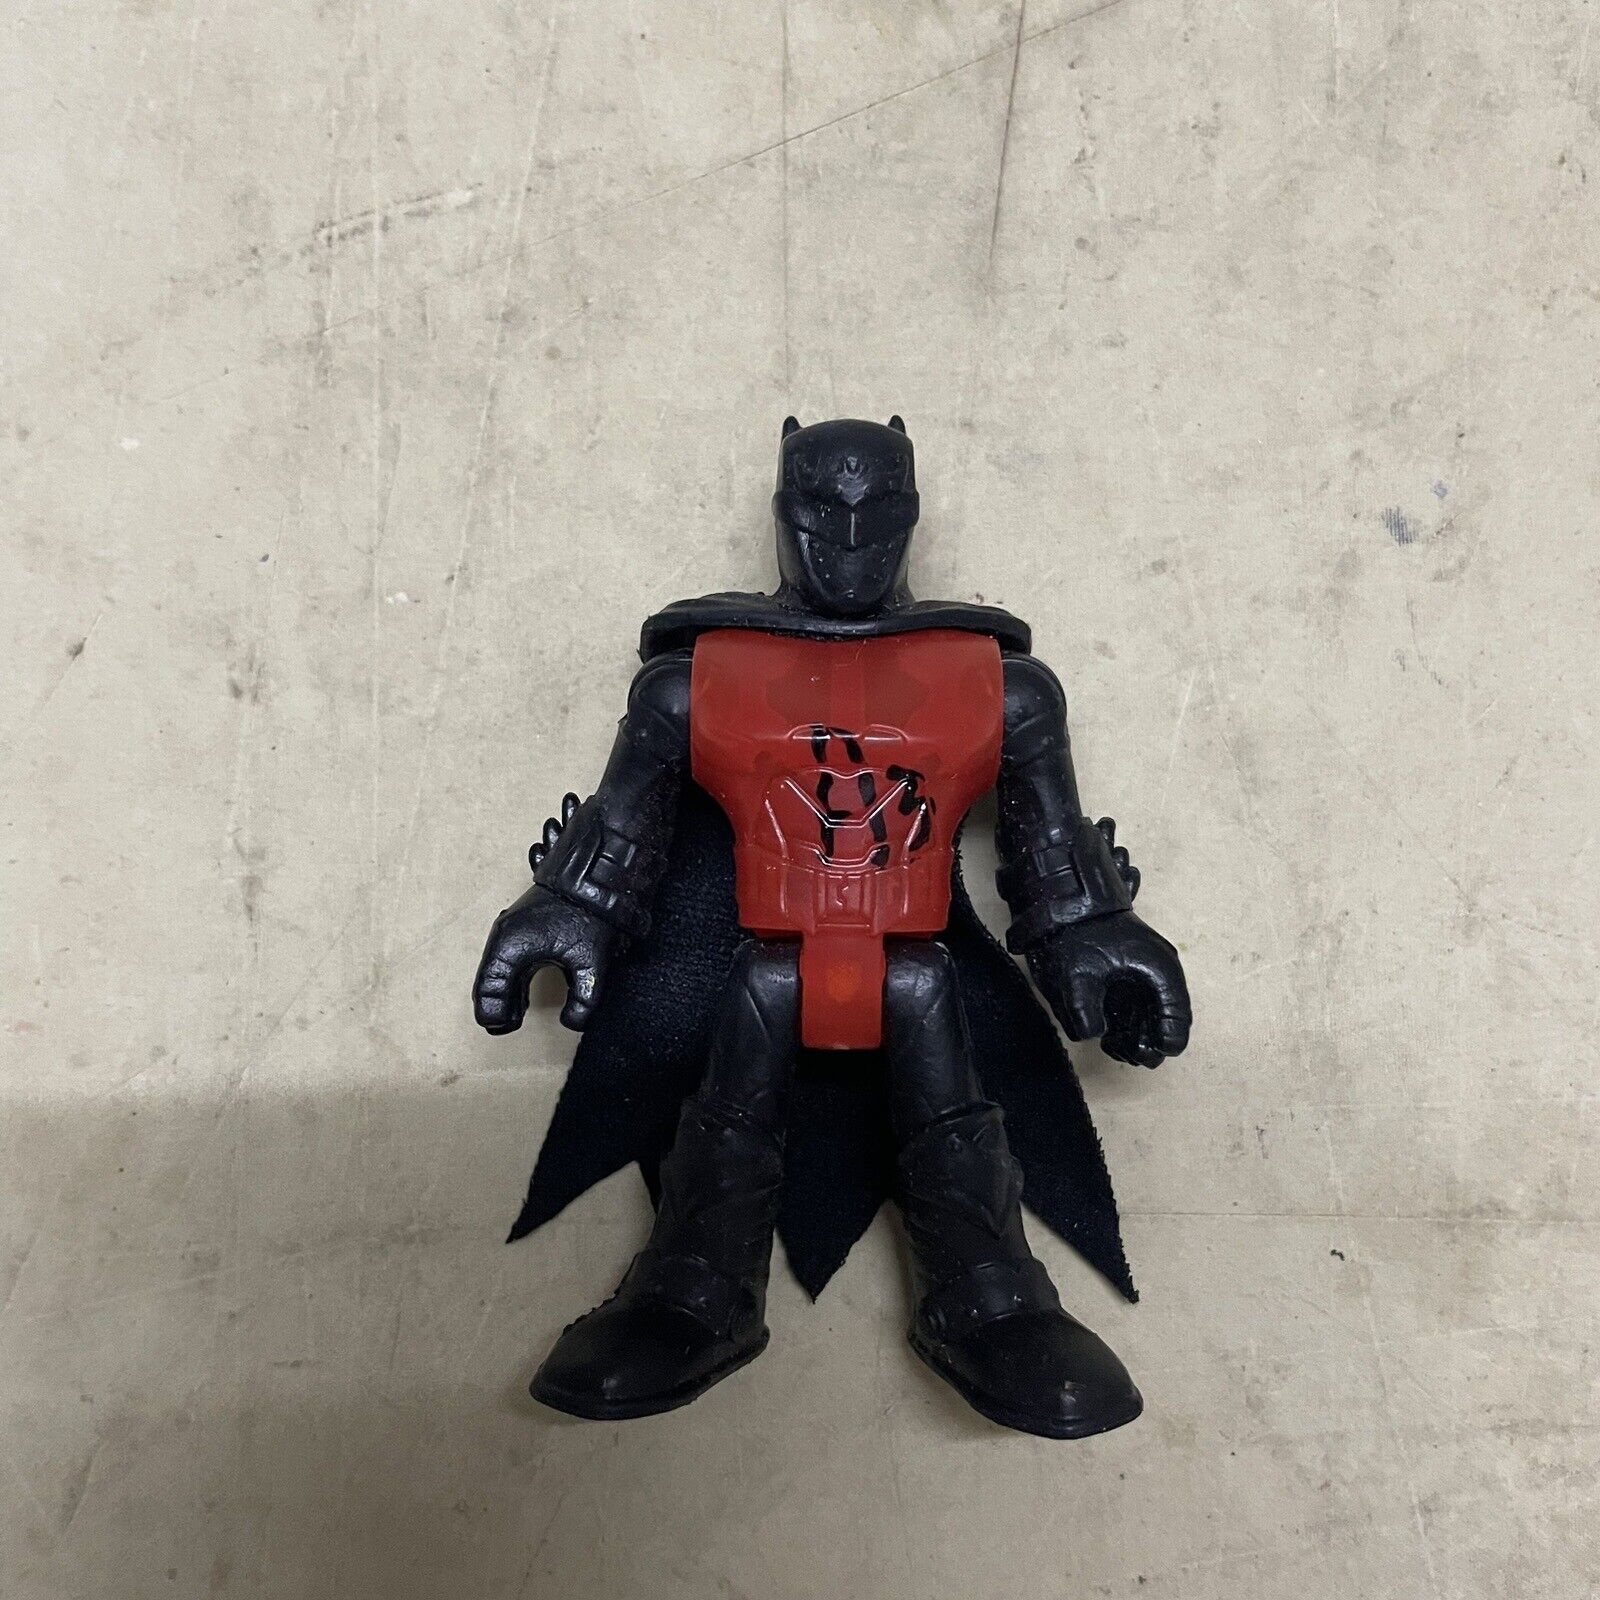 loose Fisher Price Imaginex DC Super Friends Batman Prototype Action Figure